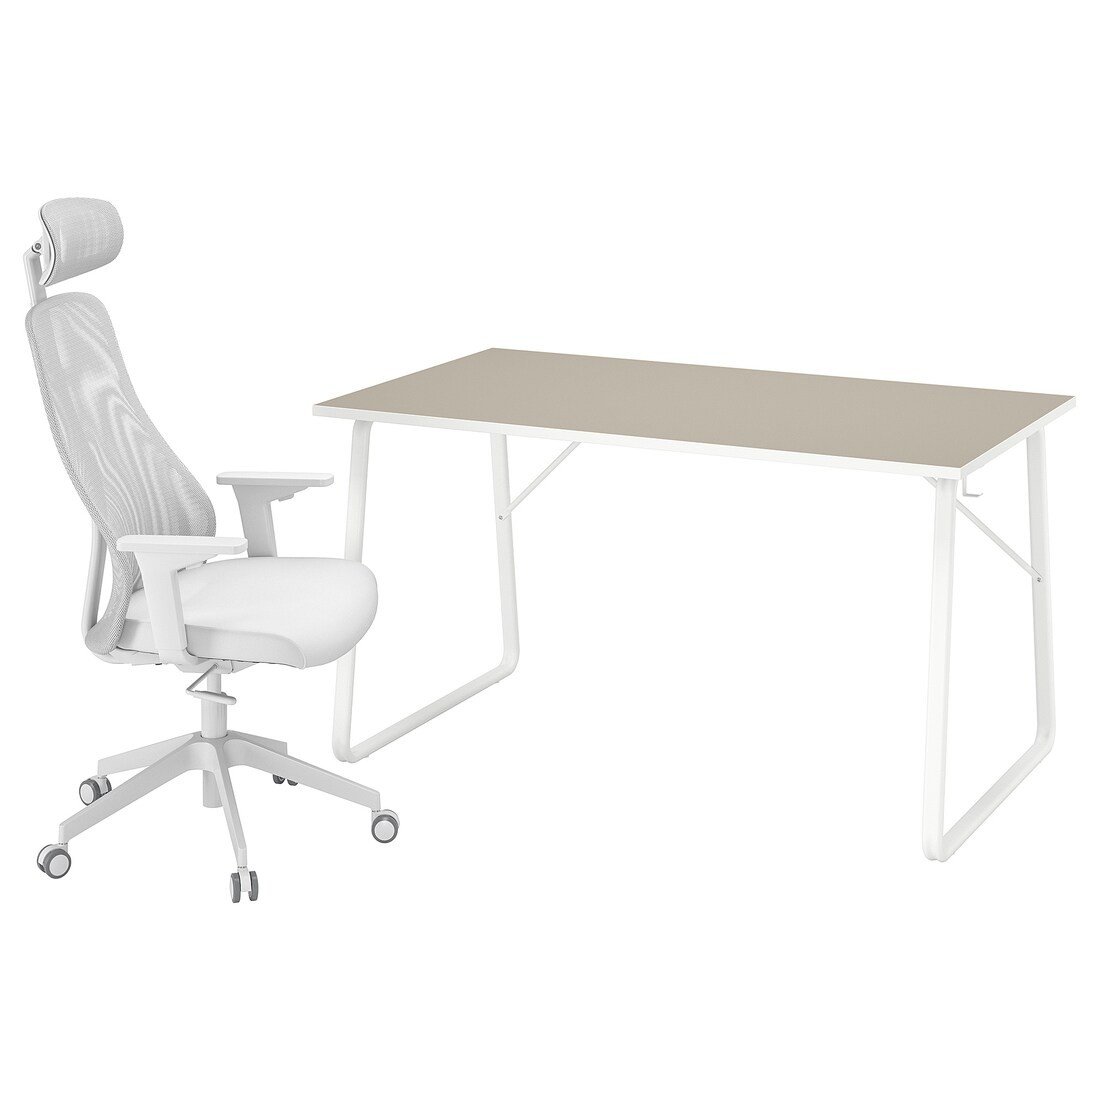 HUVUDSPELARE / MATCHSPEL Геймерский стол и стул, бежевый / светло-серый